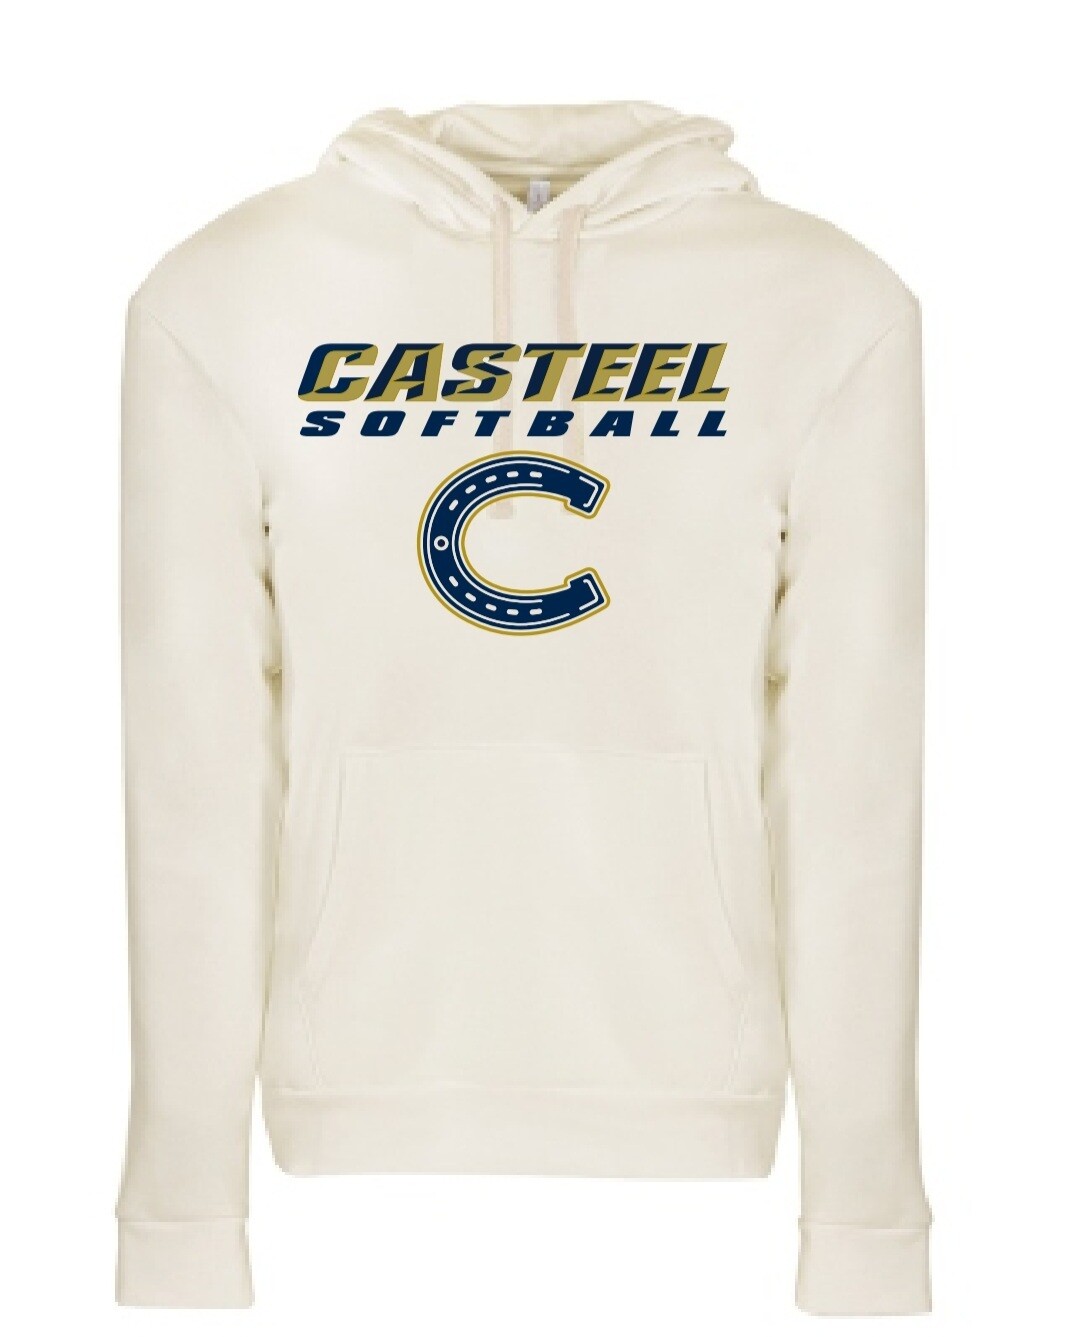 Casteel Softball 80/20 Hooded Sweatshirt